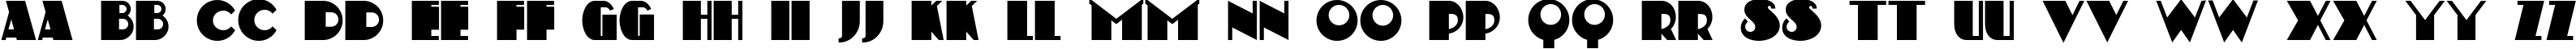 Пример написания английского алфавита шрифтом Stravinski Deco